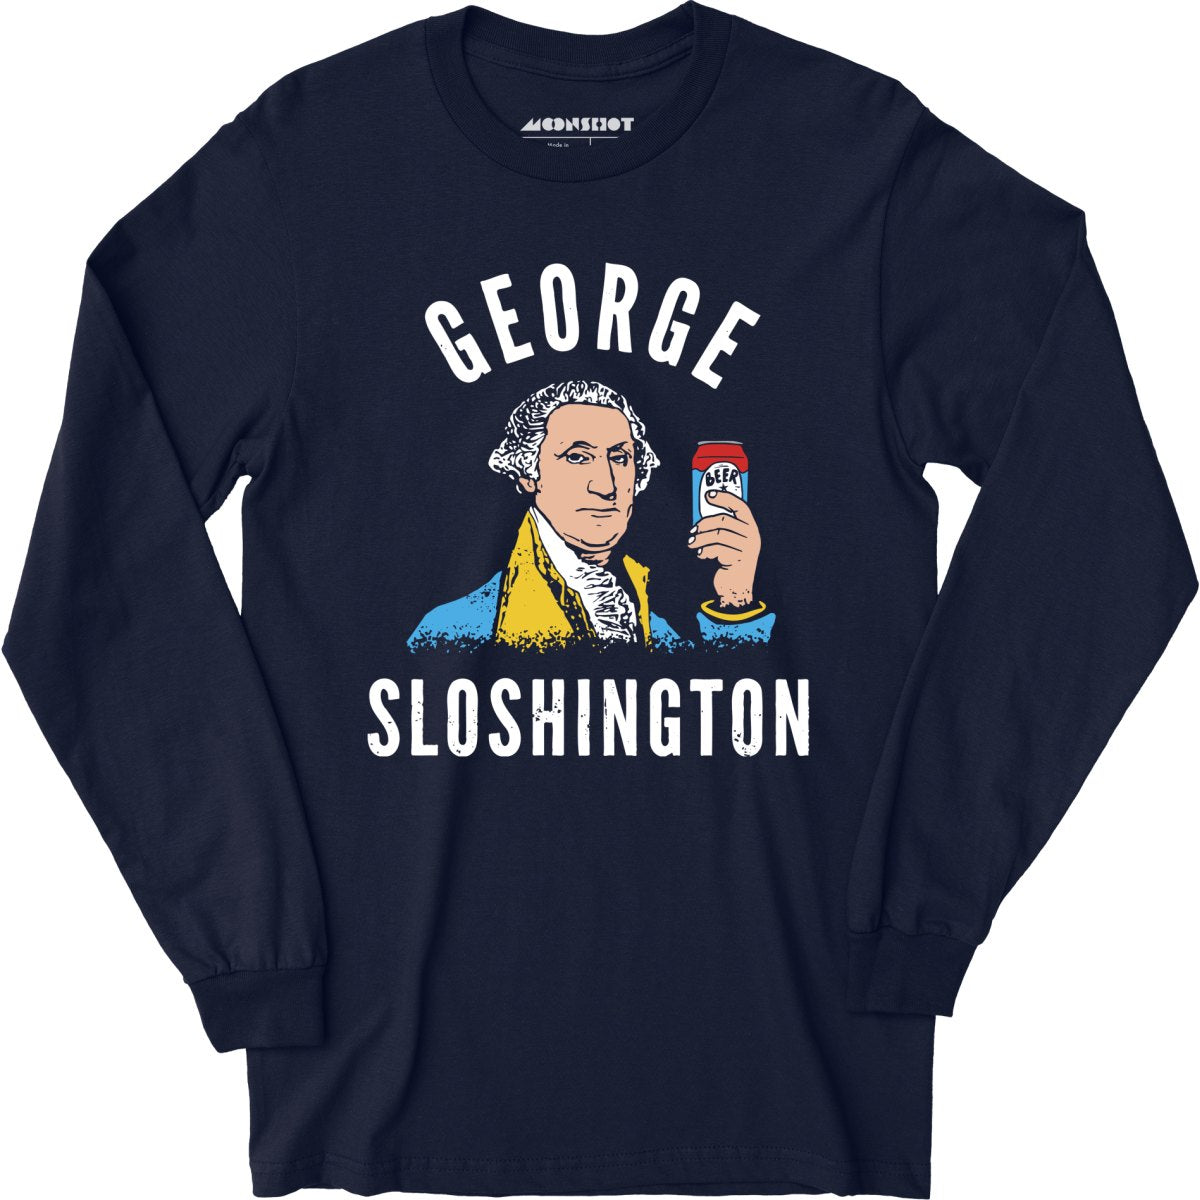 George Sloshington - Long Sleeve T-Shirt